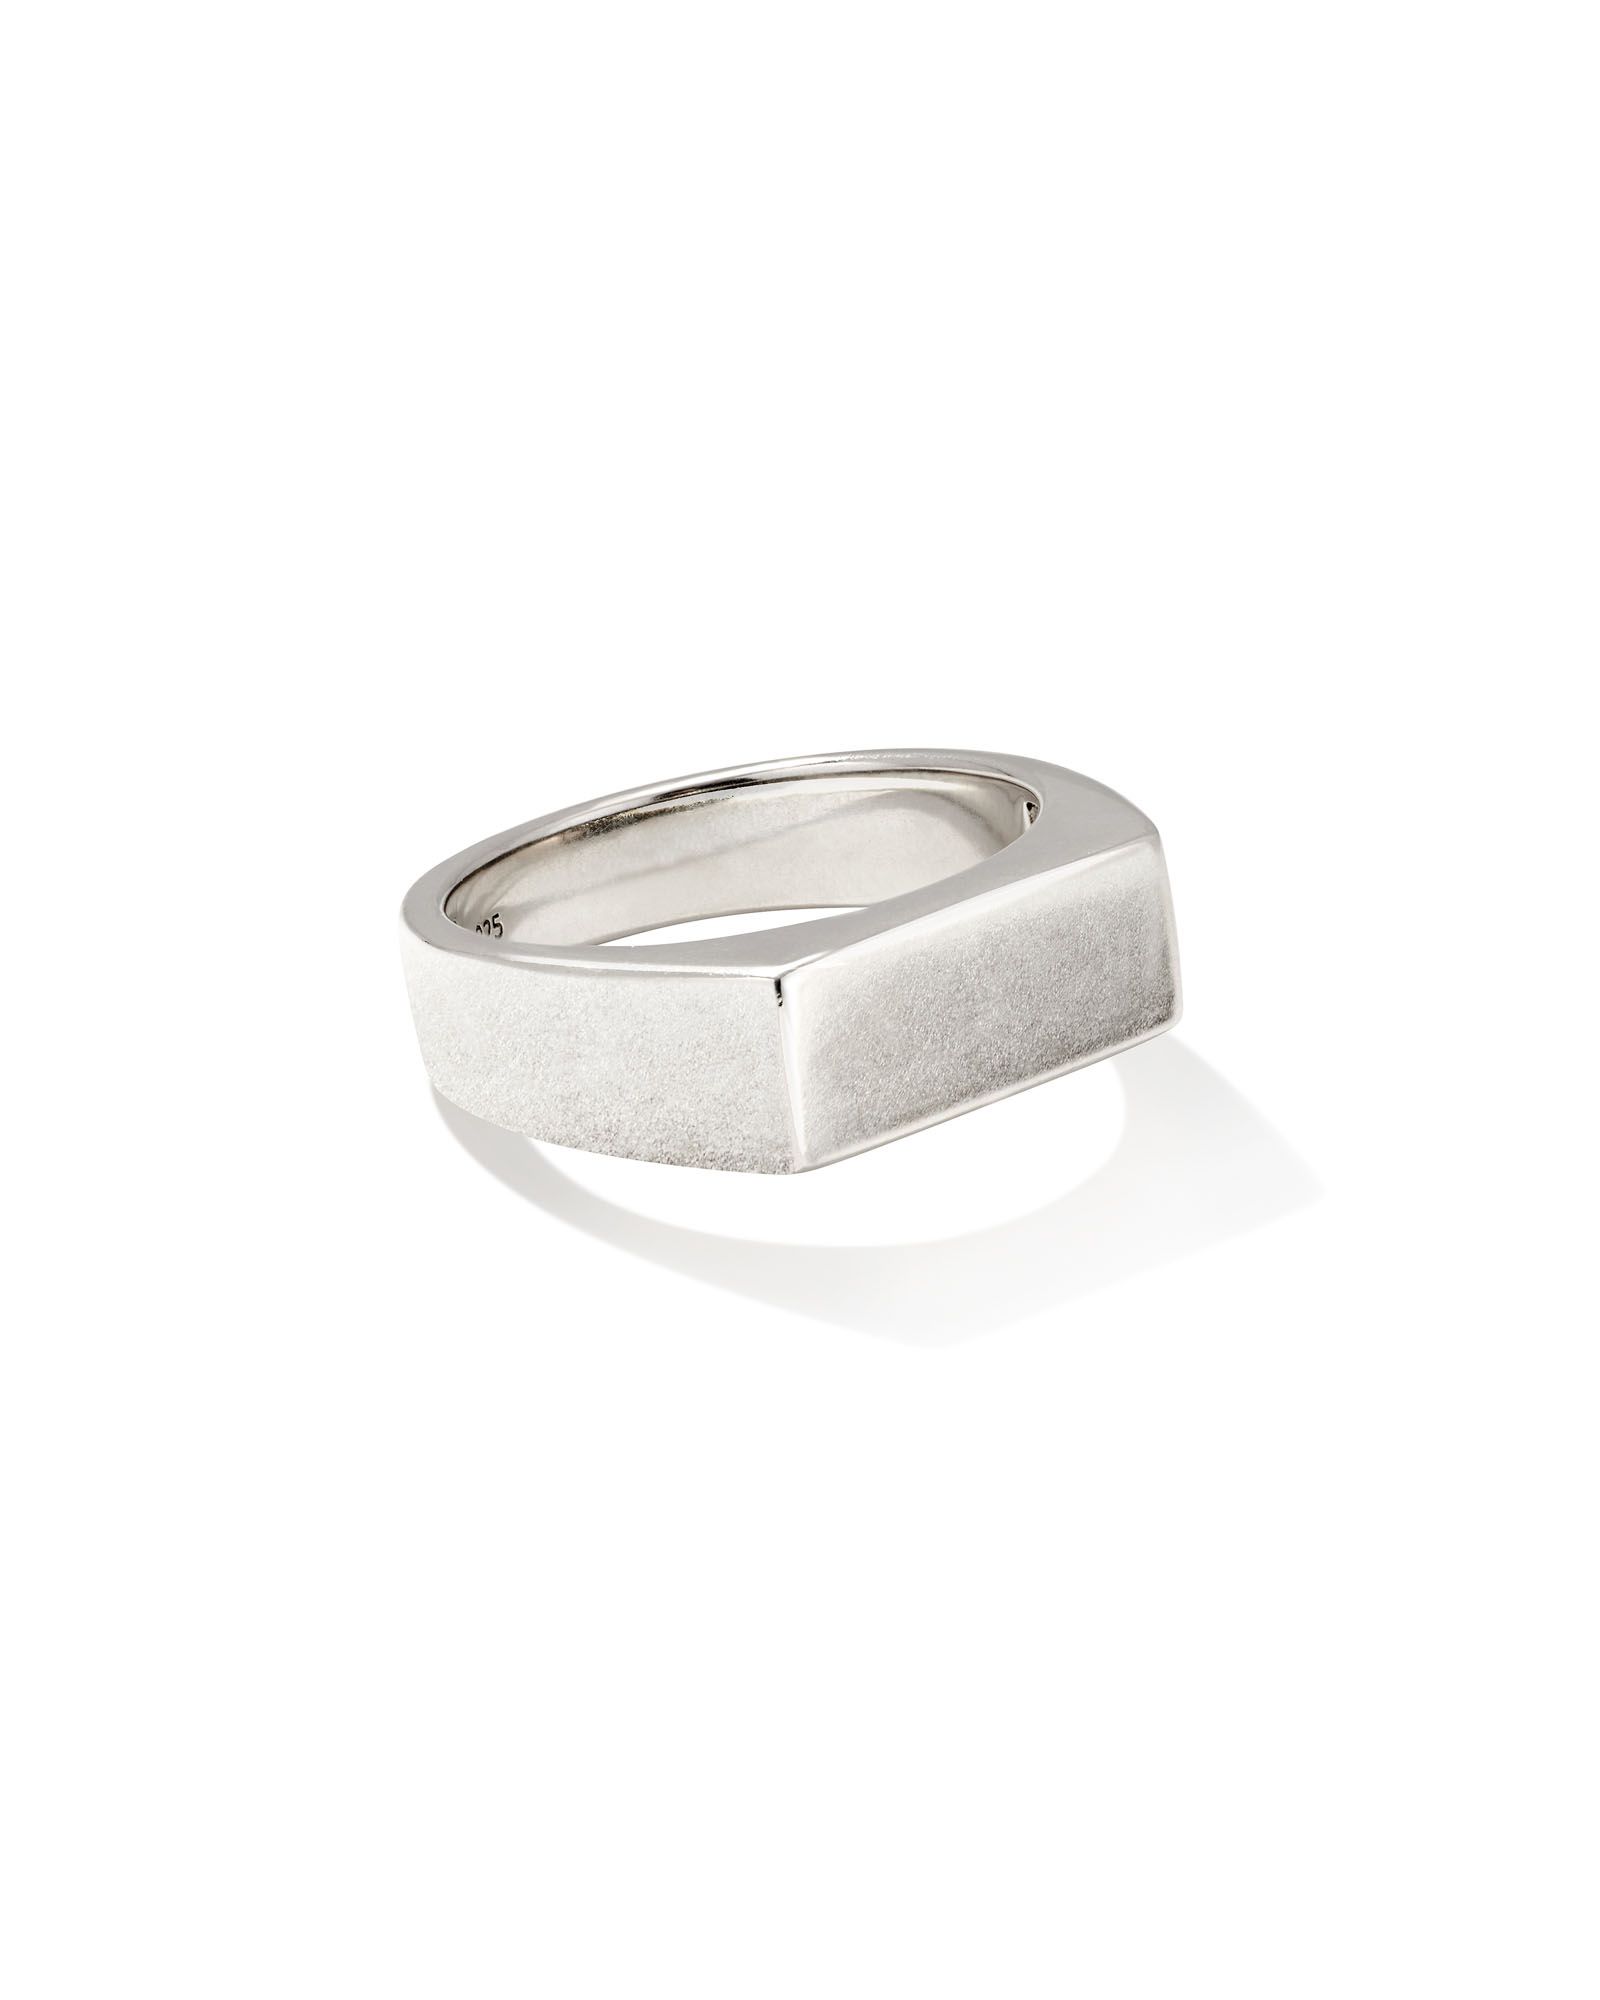 Hudson Signet Ring in Oxidized Sterling Silver | Kendra Scott